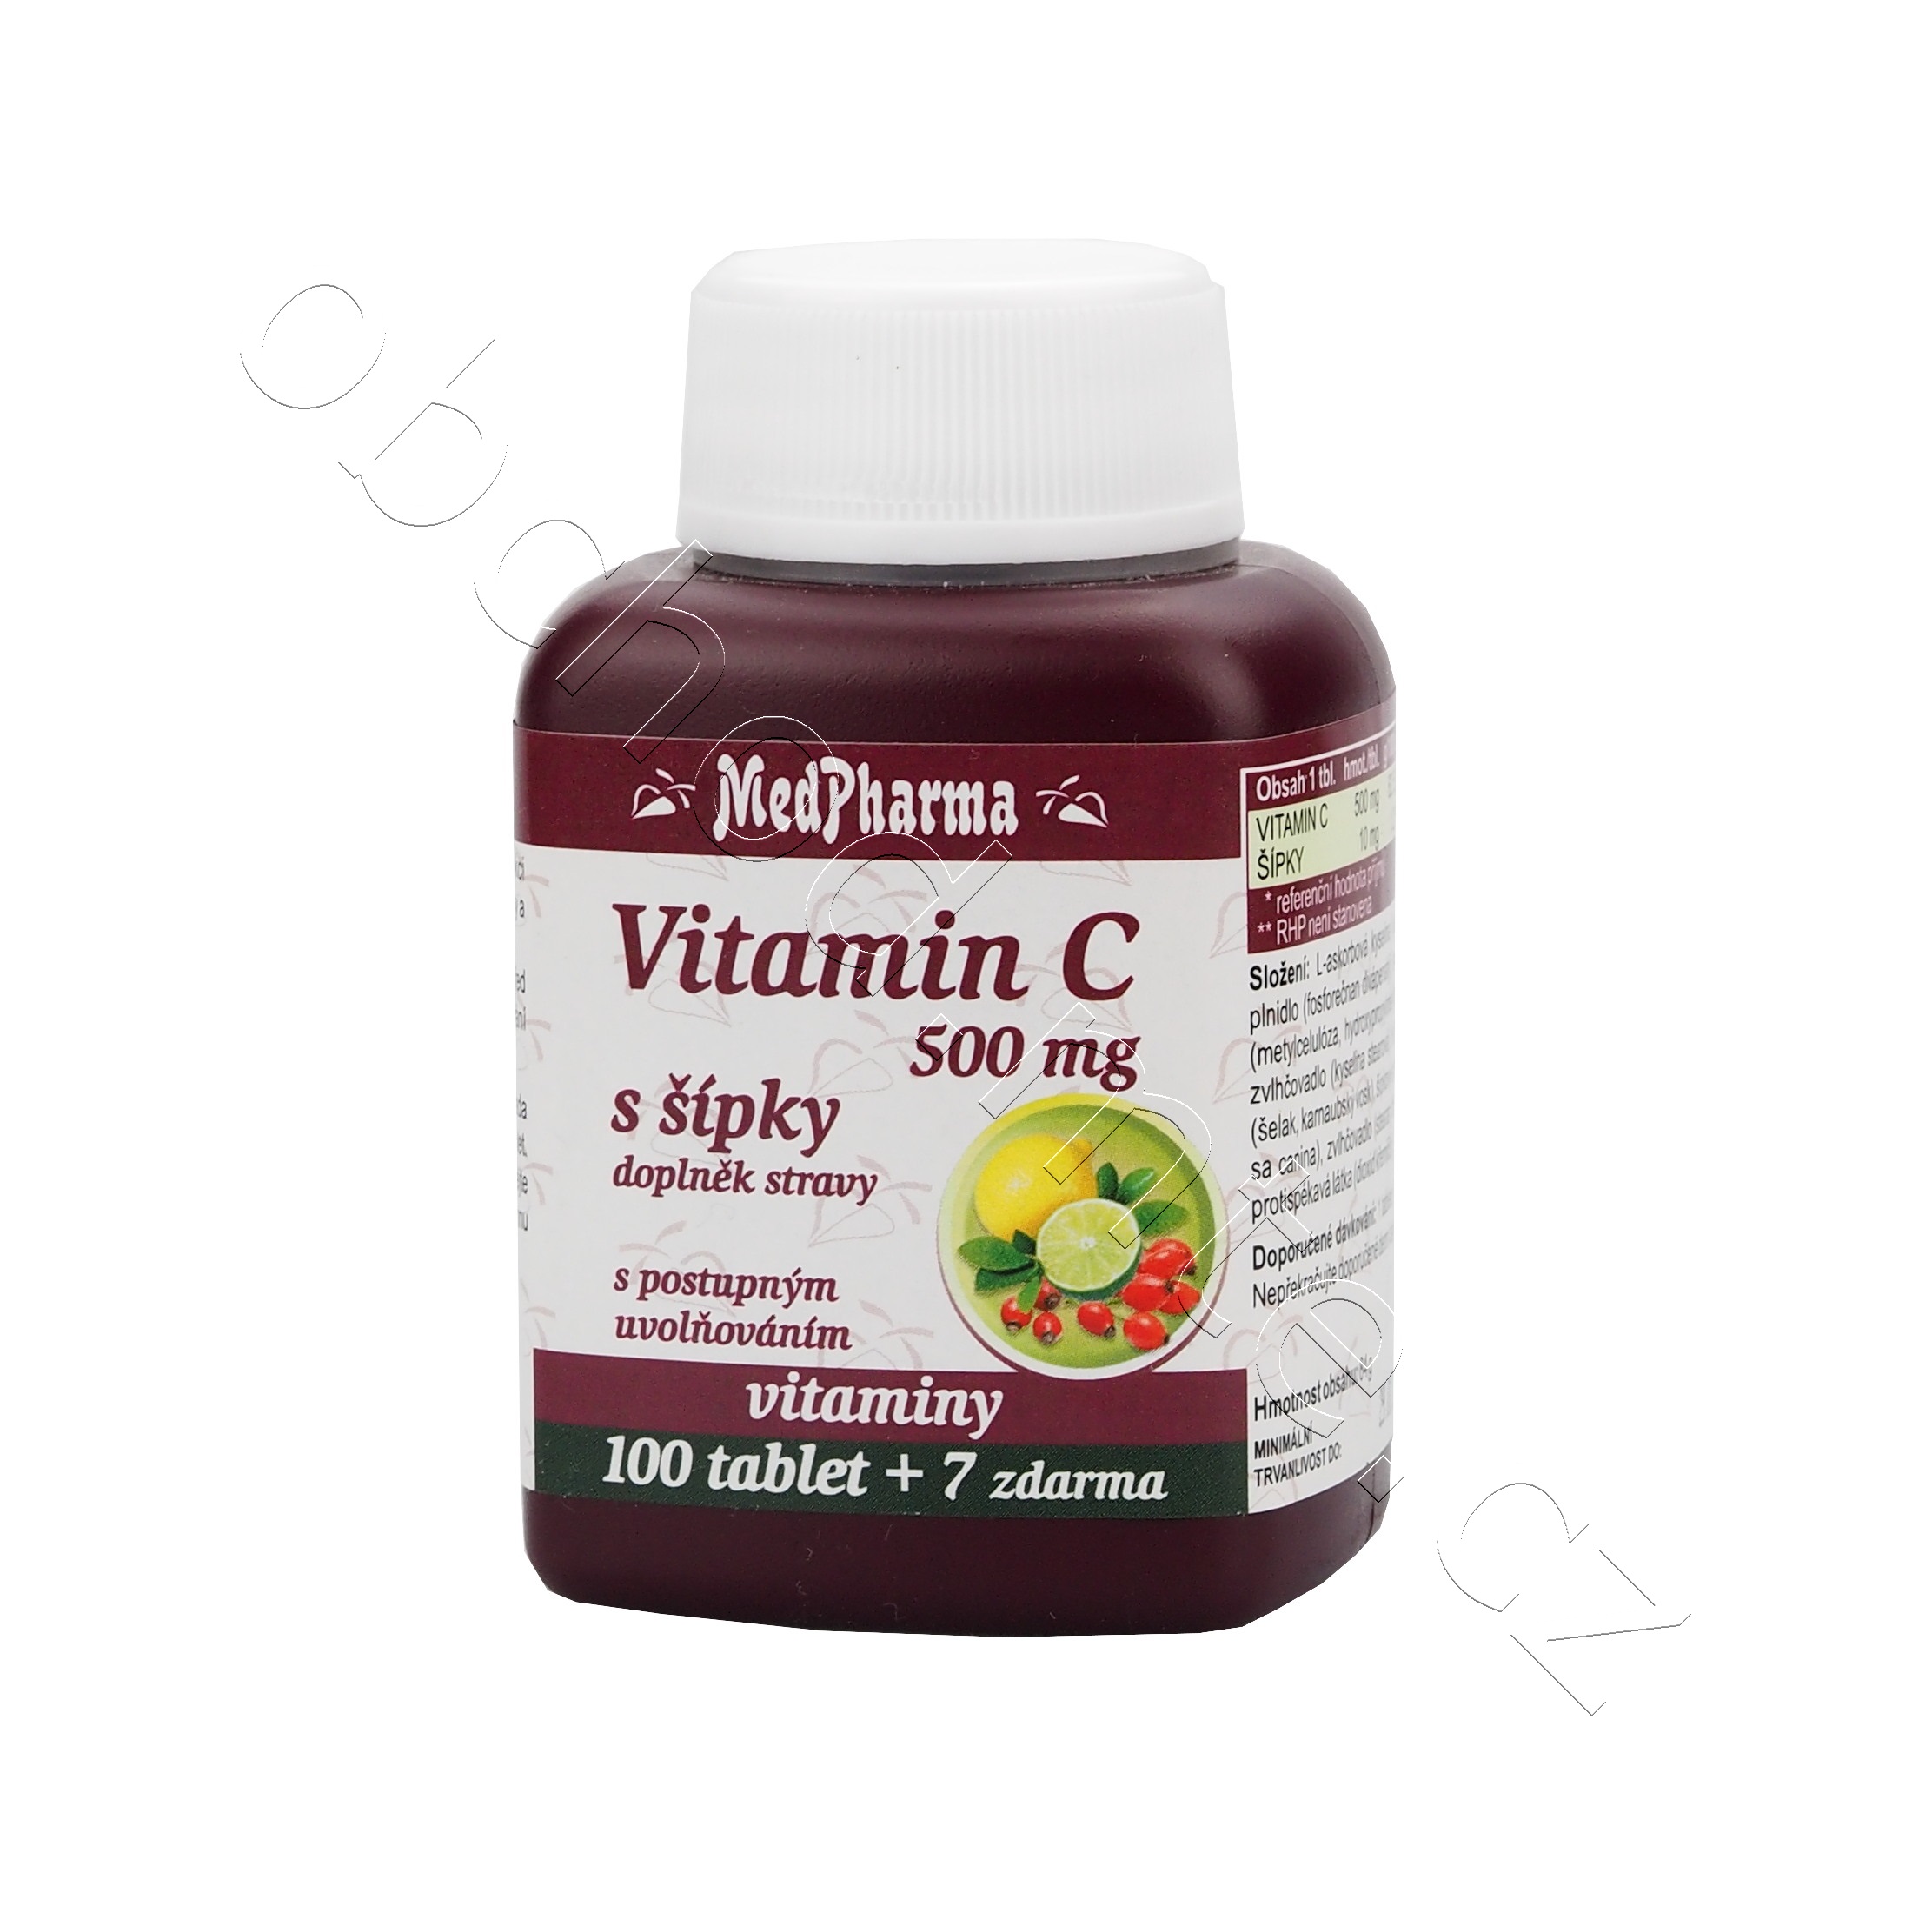 vitamin-c-500mg-s-sipky.jpg